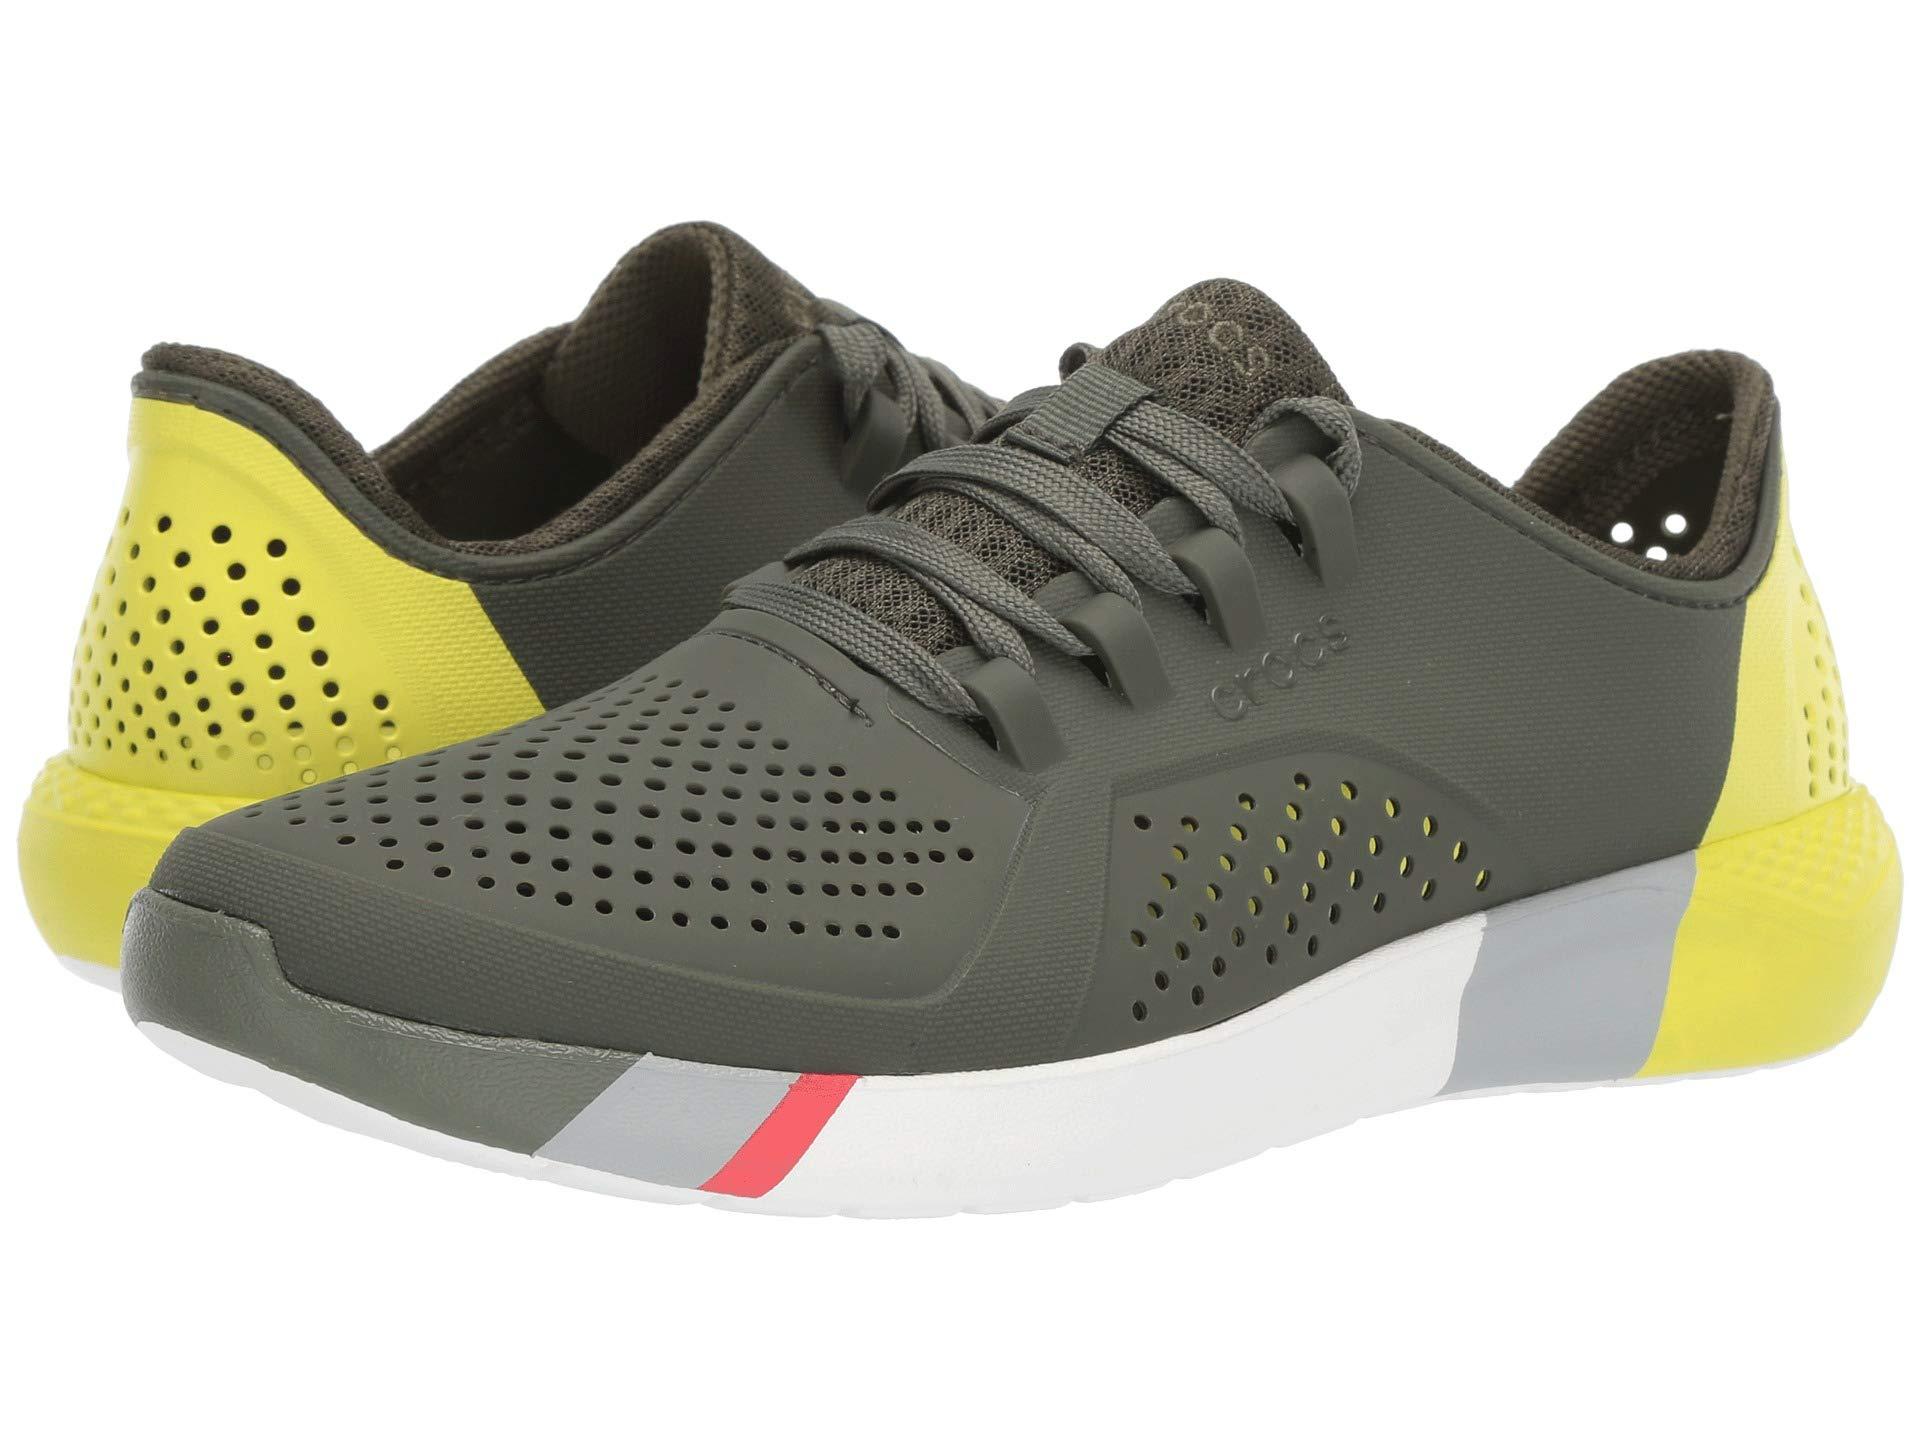 gray croc tennis shoes